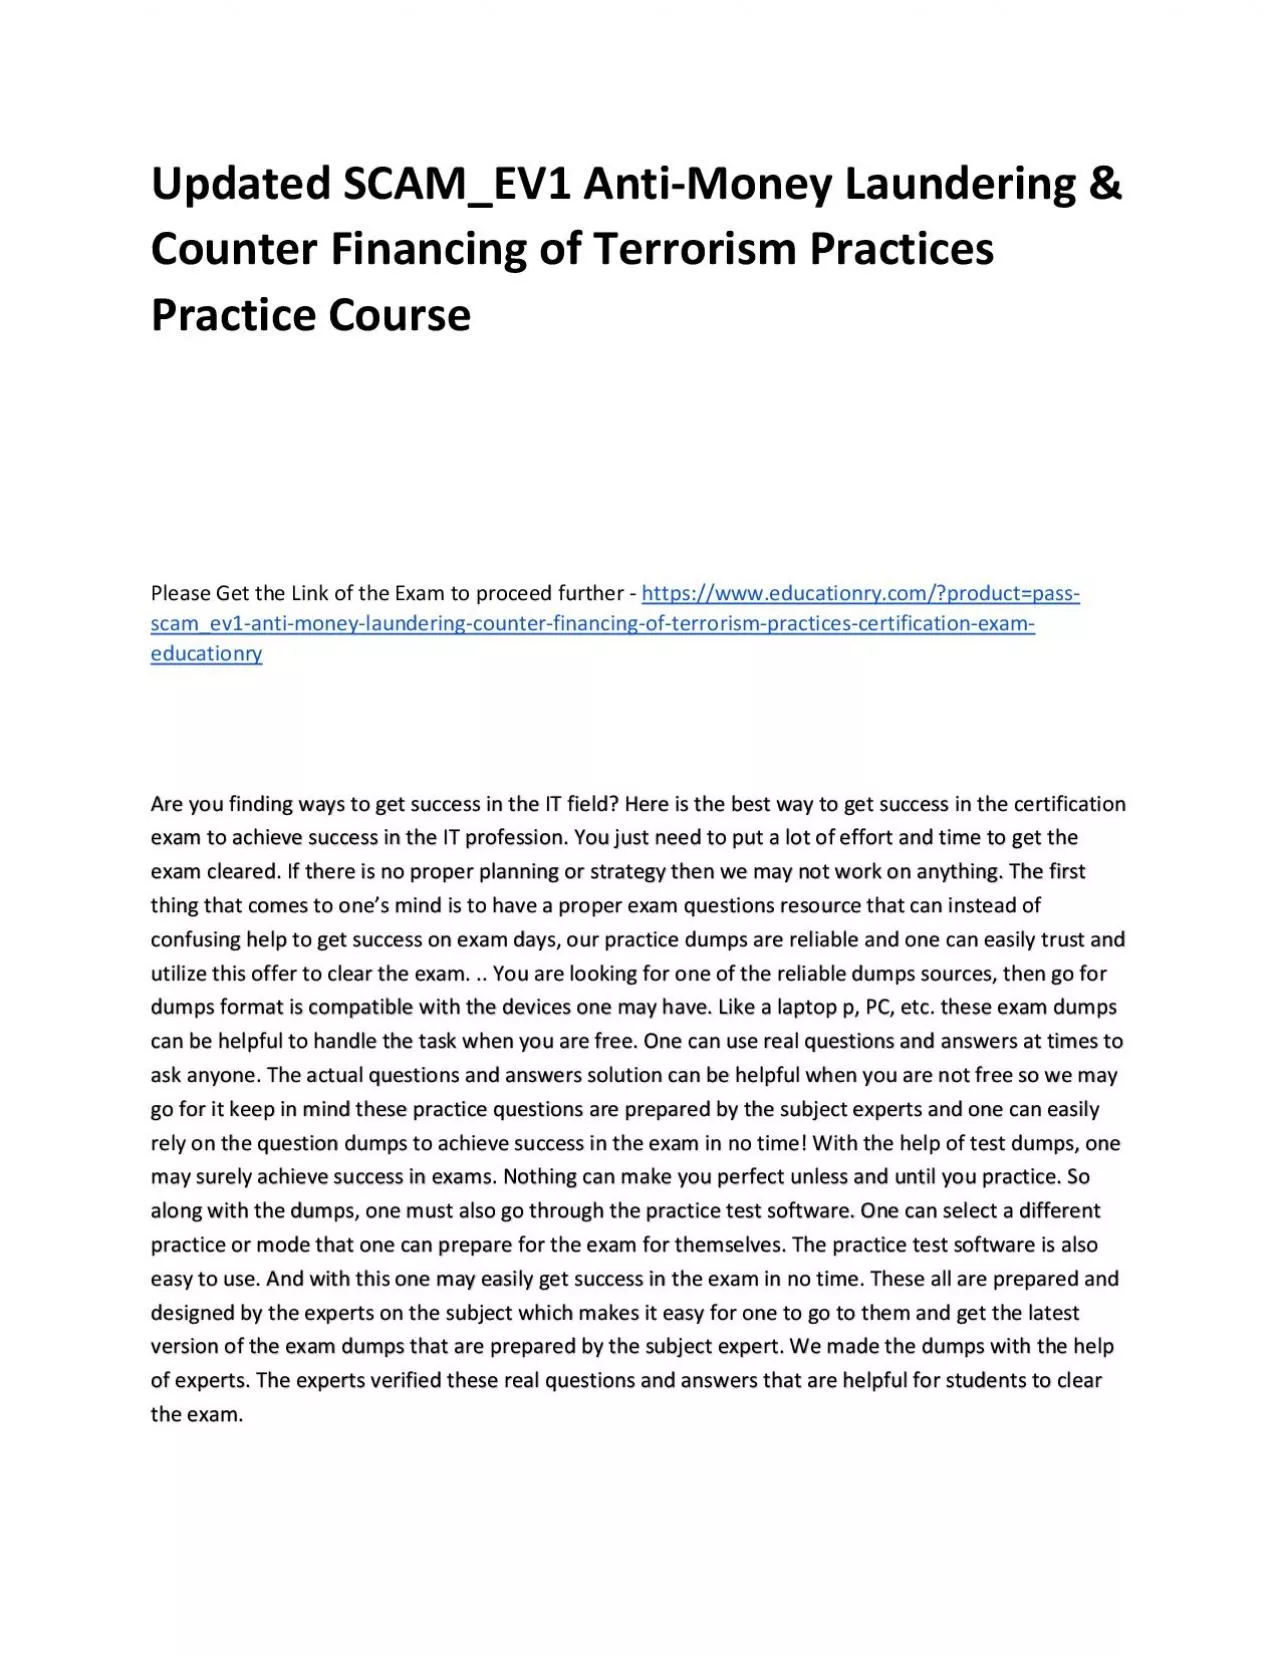 Updated SCAM_EV1 Anti-Money Laundering & Counter Financing of Terrorism Practices Practice